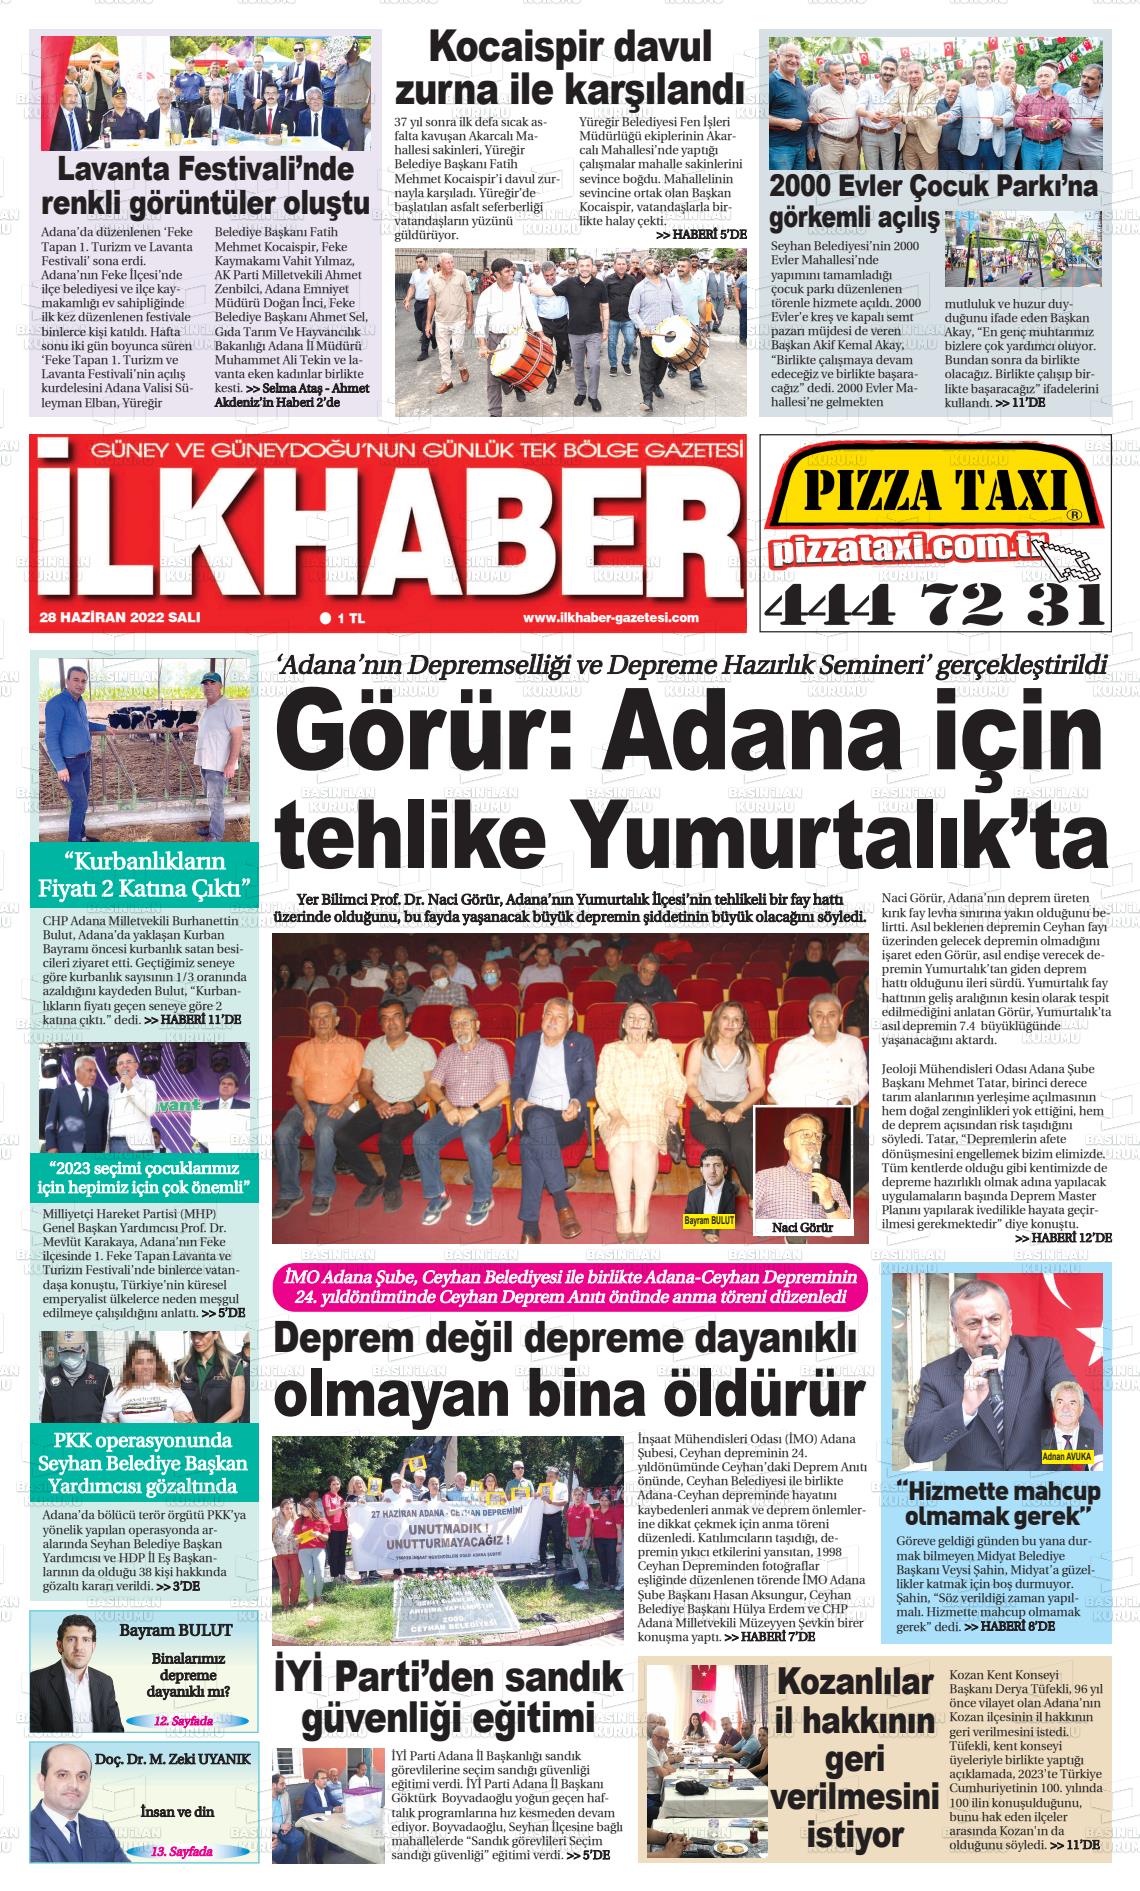 28 Haziran 2022 İlk Haber Gazete Manşeti